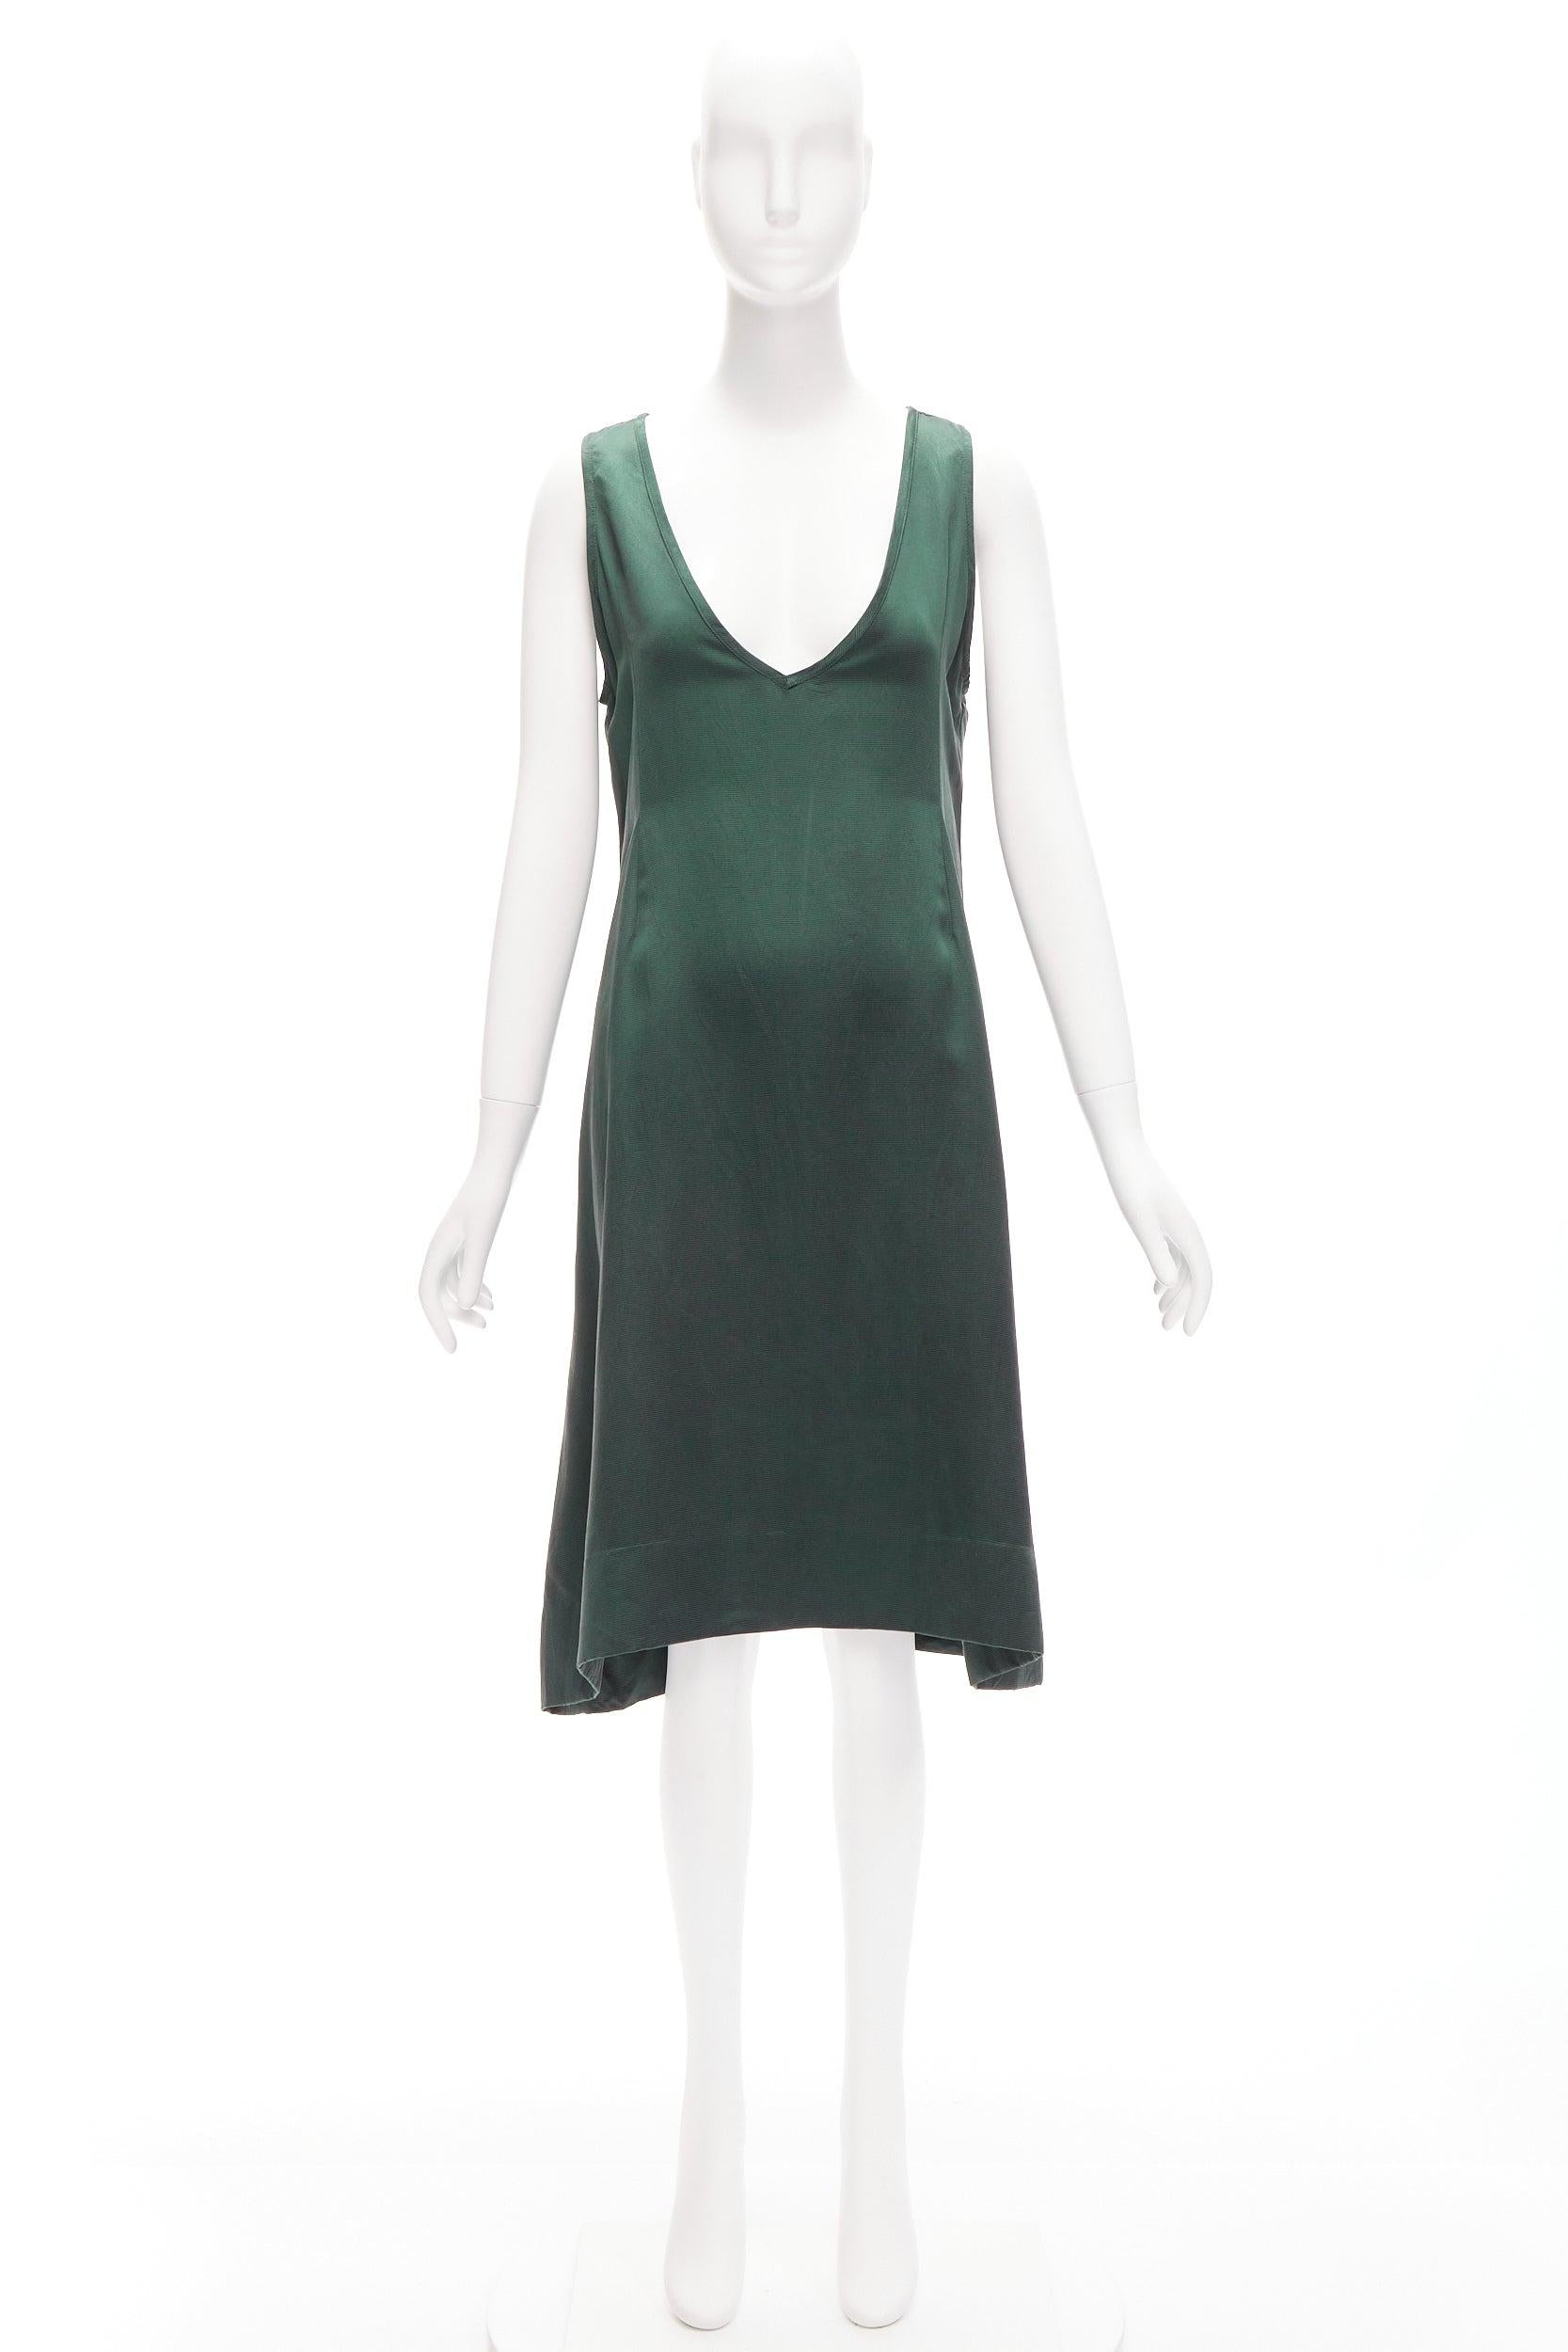 DRIES VAN NOTEN 100% silk dark green plunge neck sleeveless trapeze dress S For Sale 3